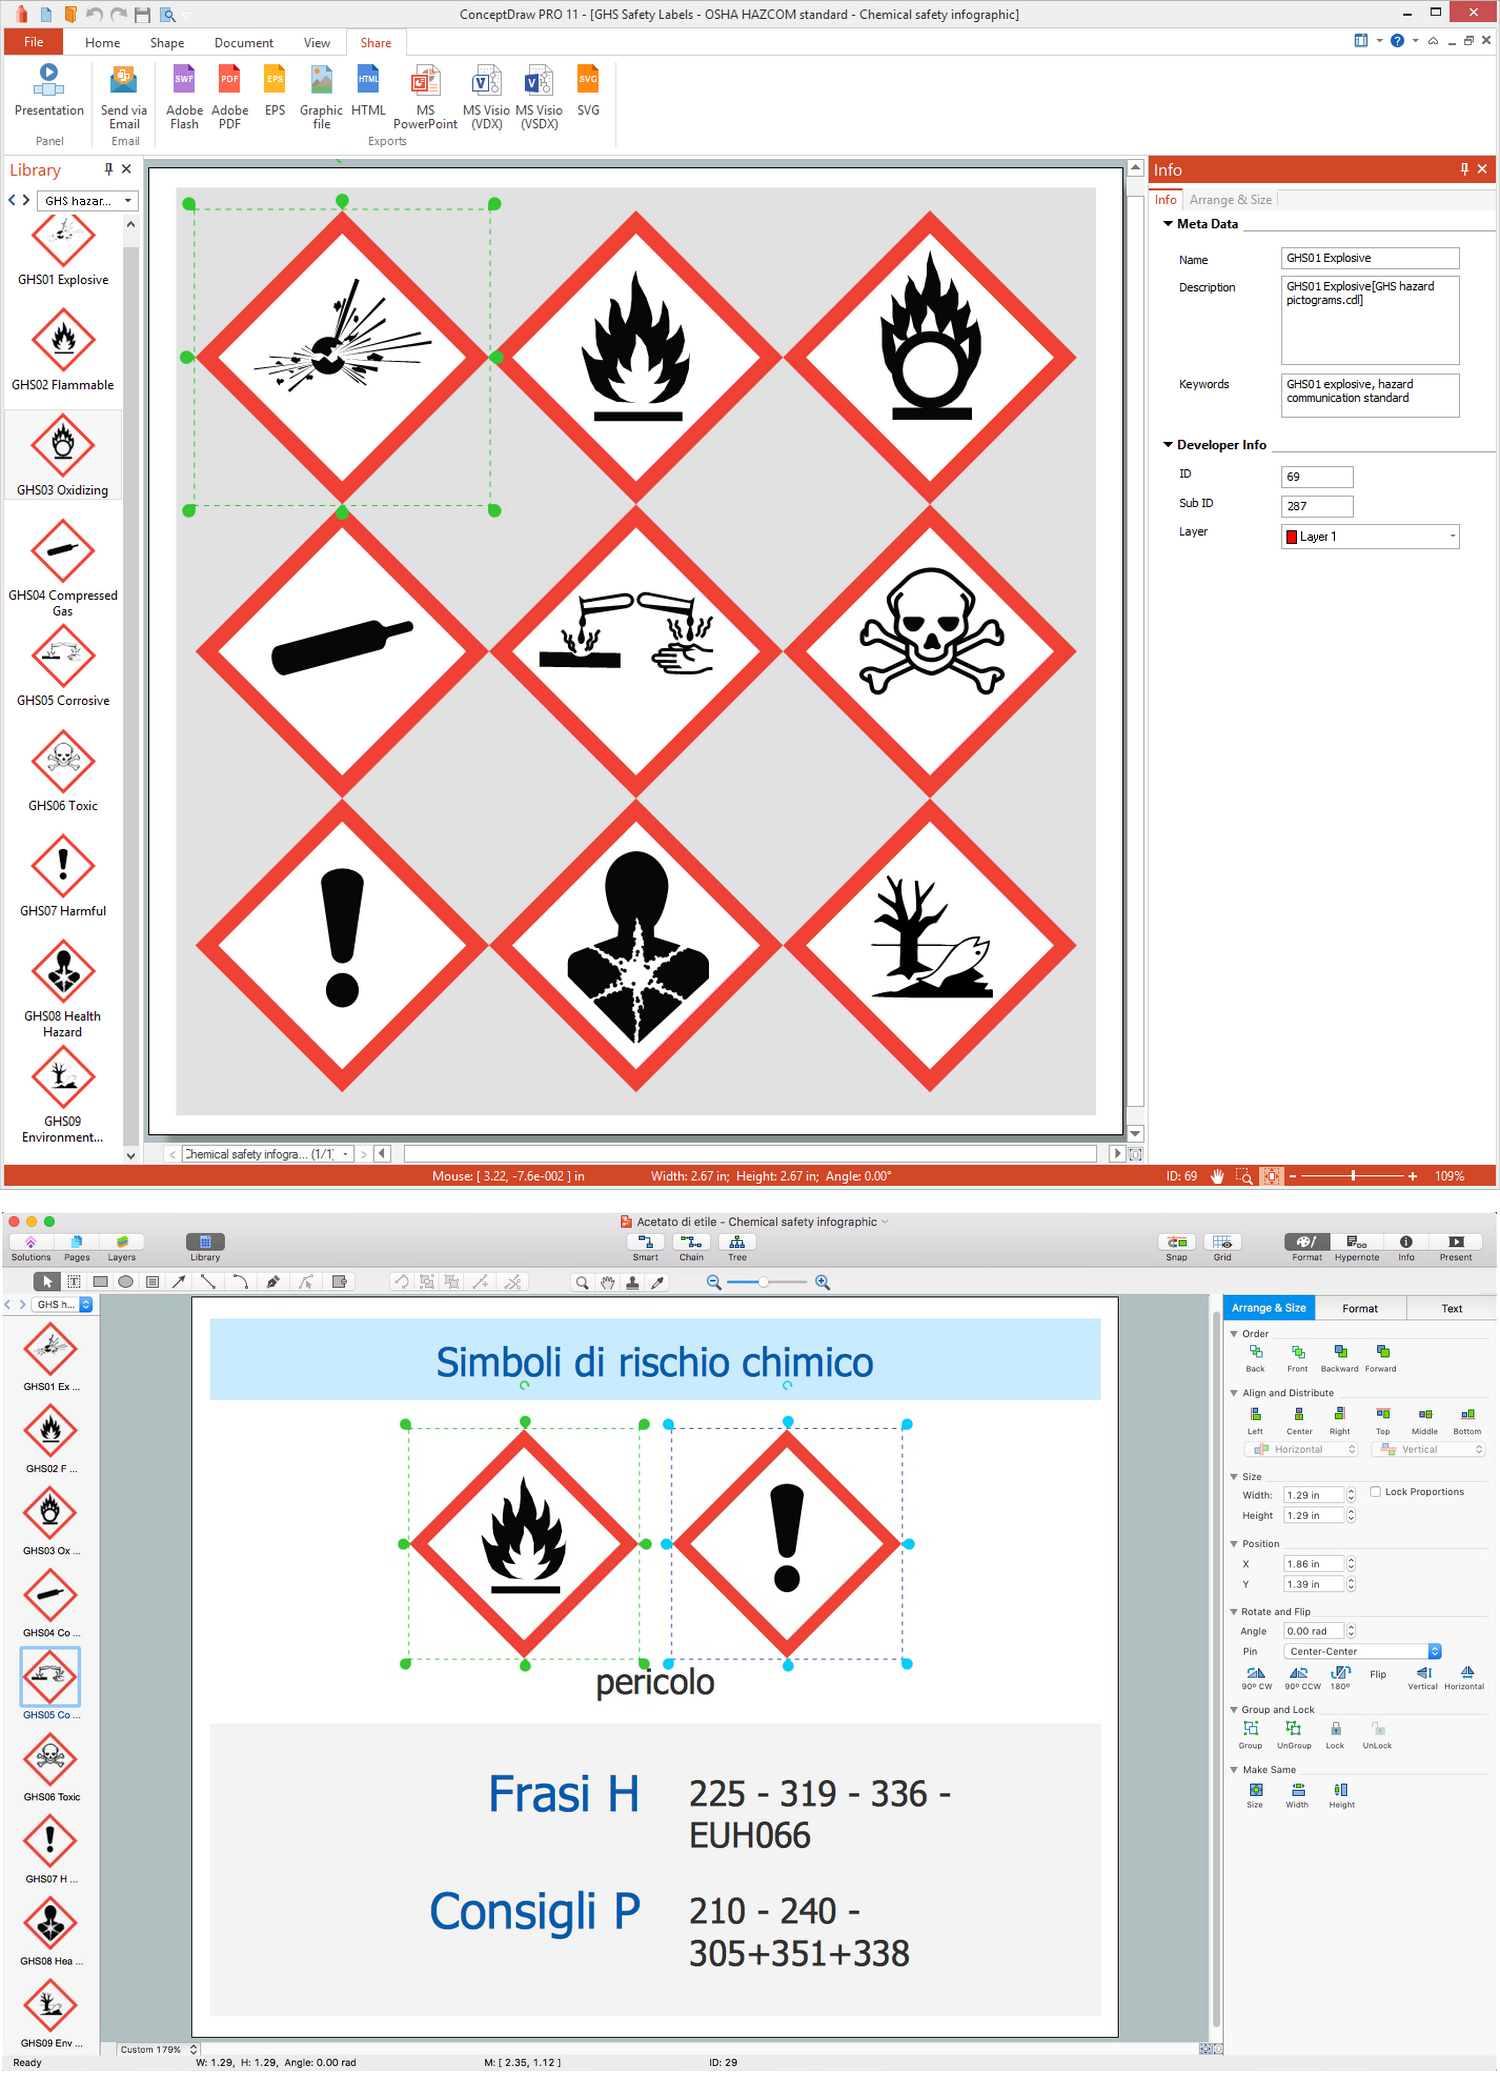 Design Safety Infographic with OSHA HAZCOM pictograms - Acetato di etile